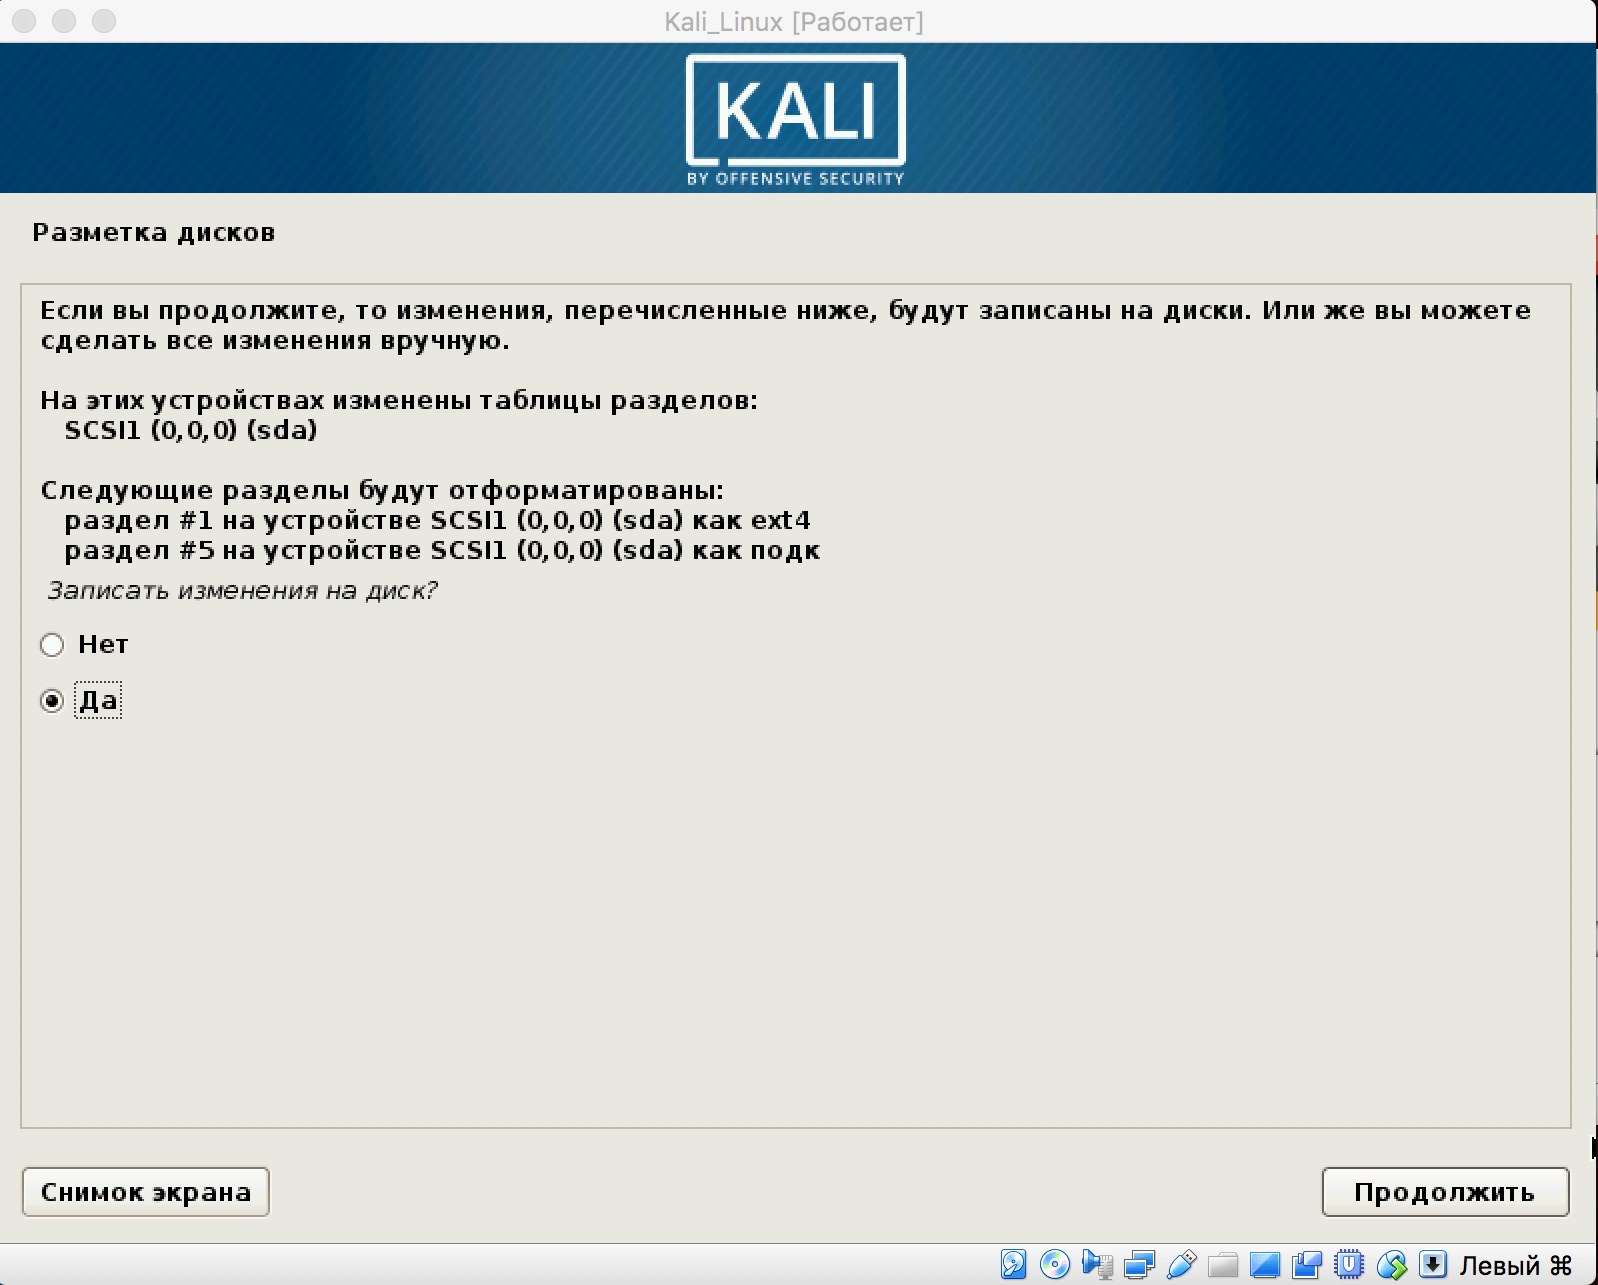 Kali linux installation - kali 2.0 2016.01 - hacking tutorials